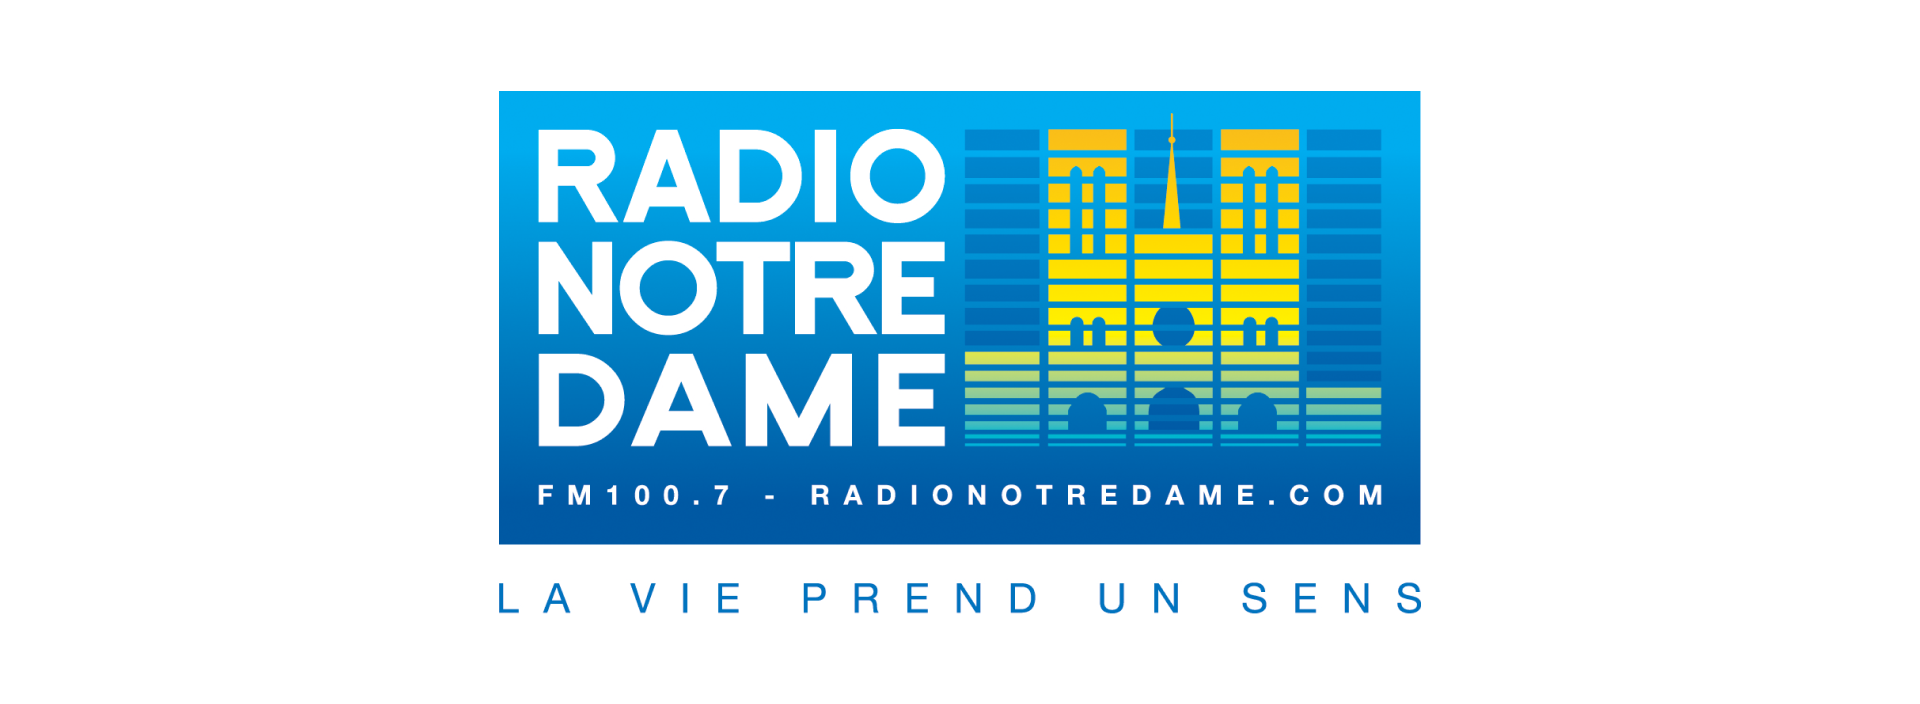 Heavn : Logo de Radio Notre-Dame.